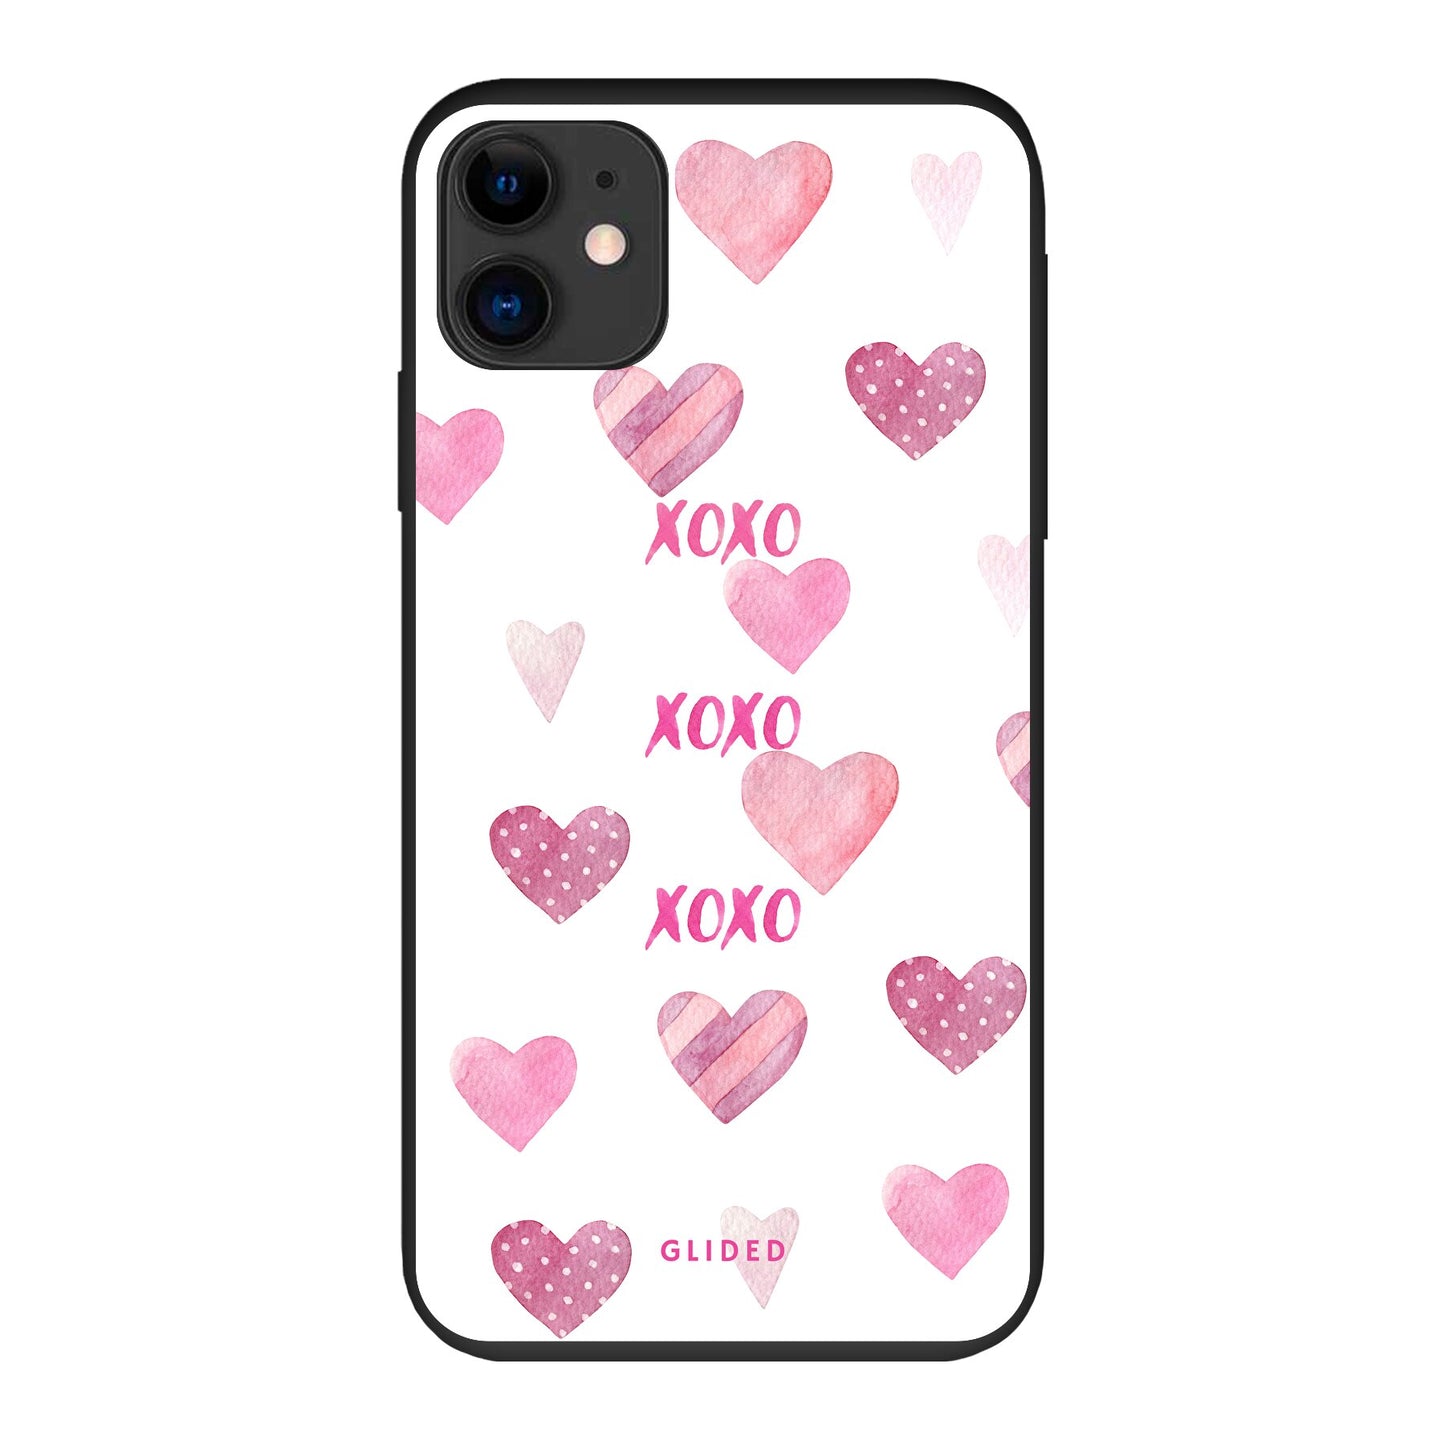 Xoxo - iPhone 11 - Biologisch Abbaubar